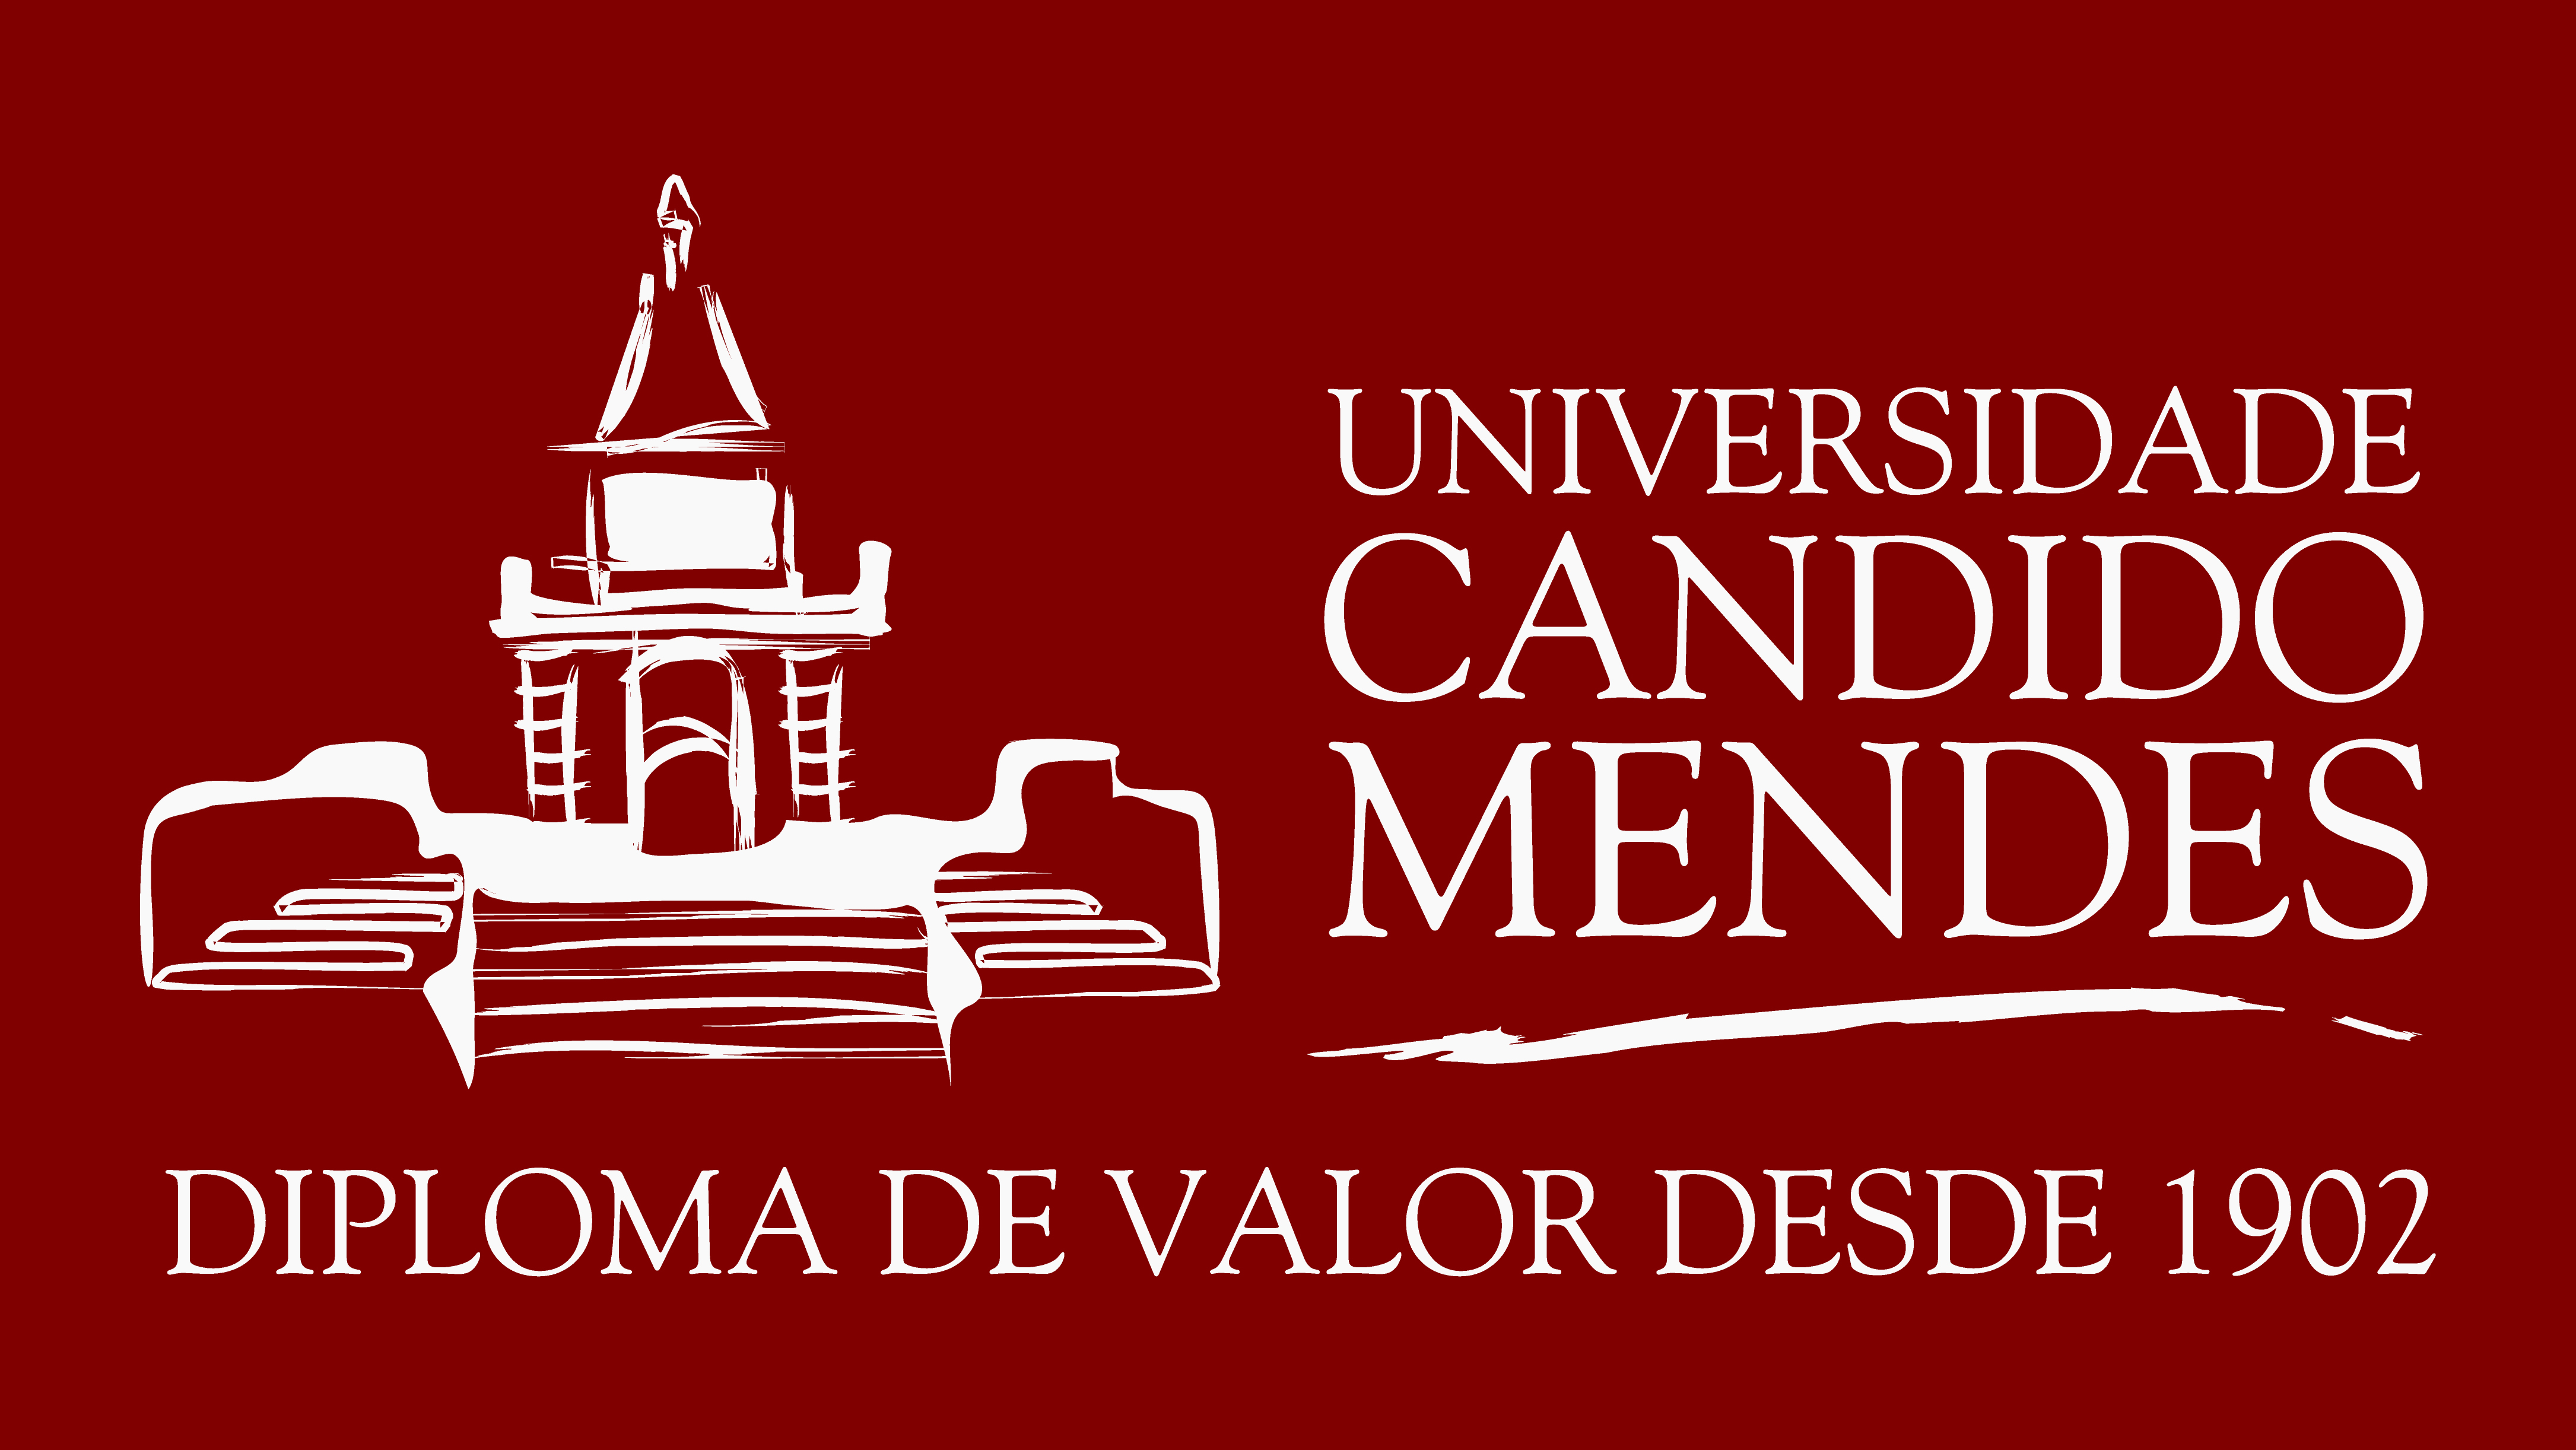 Universidade Candido Mendes - UCAM